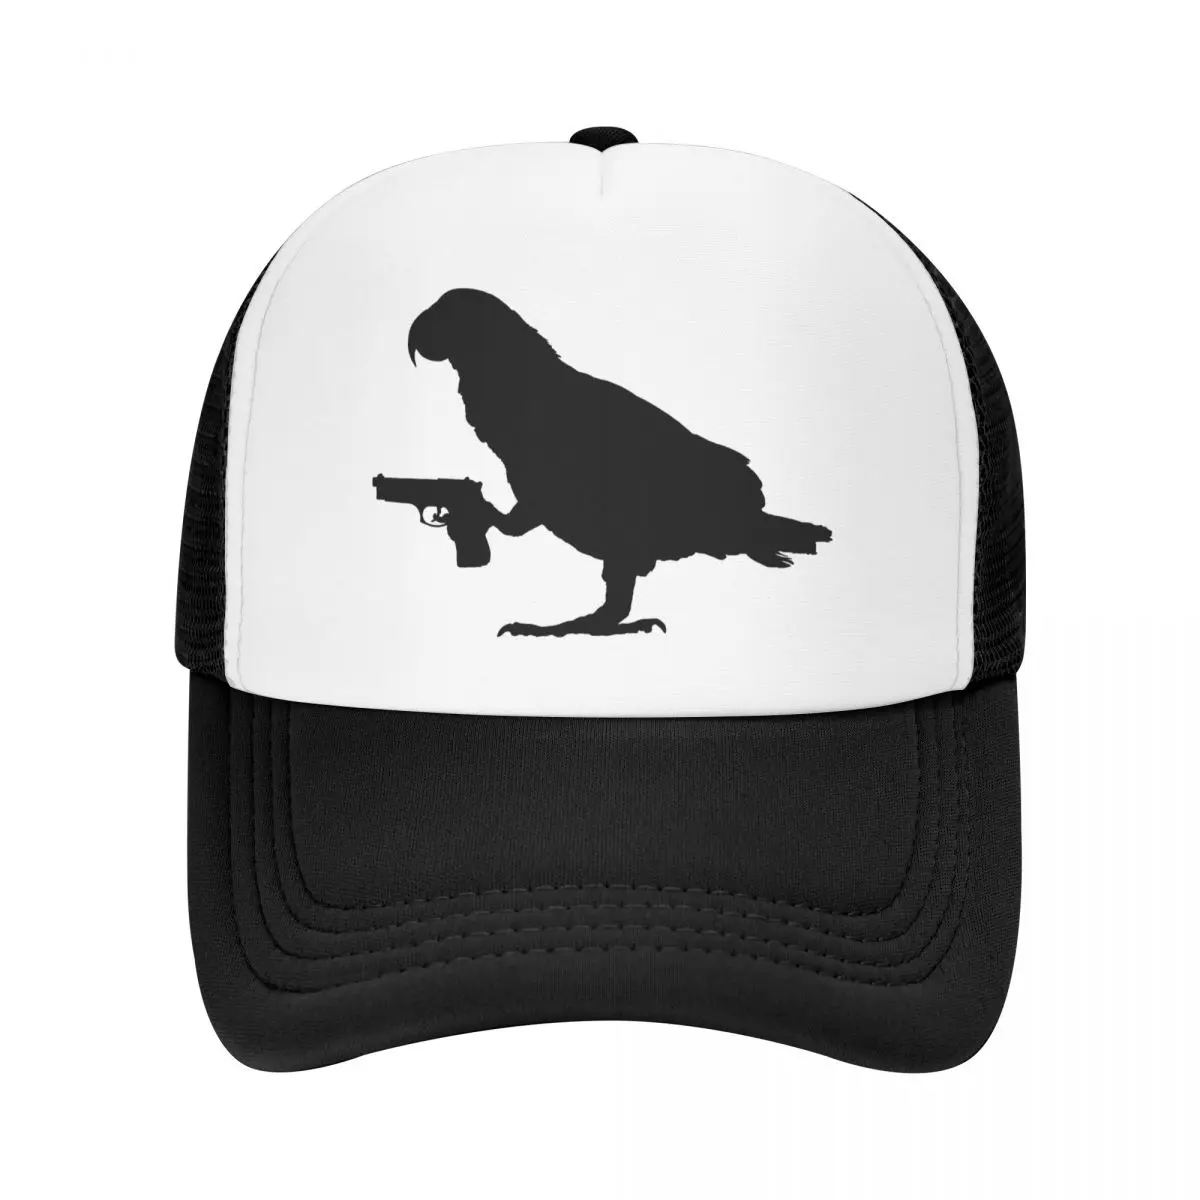 Parrot Trucker Hats Holding A Gun Mesh Net Baseball Cap Snapback Outdoor Kpop adjustable Peaked Hat For Men Women